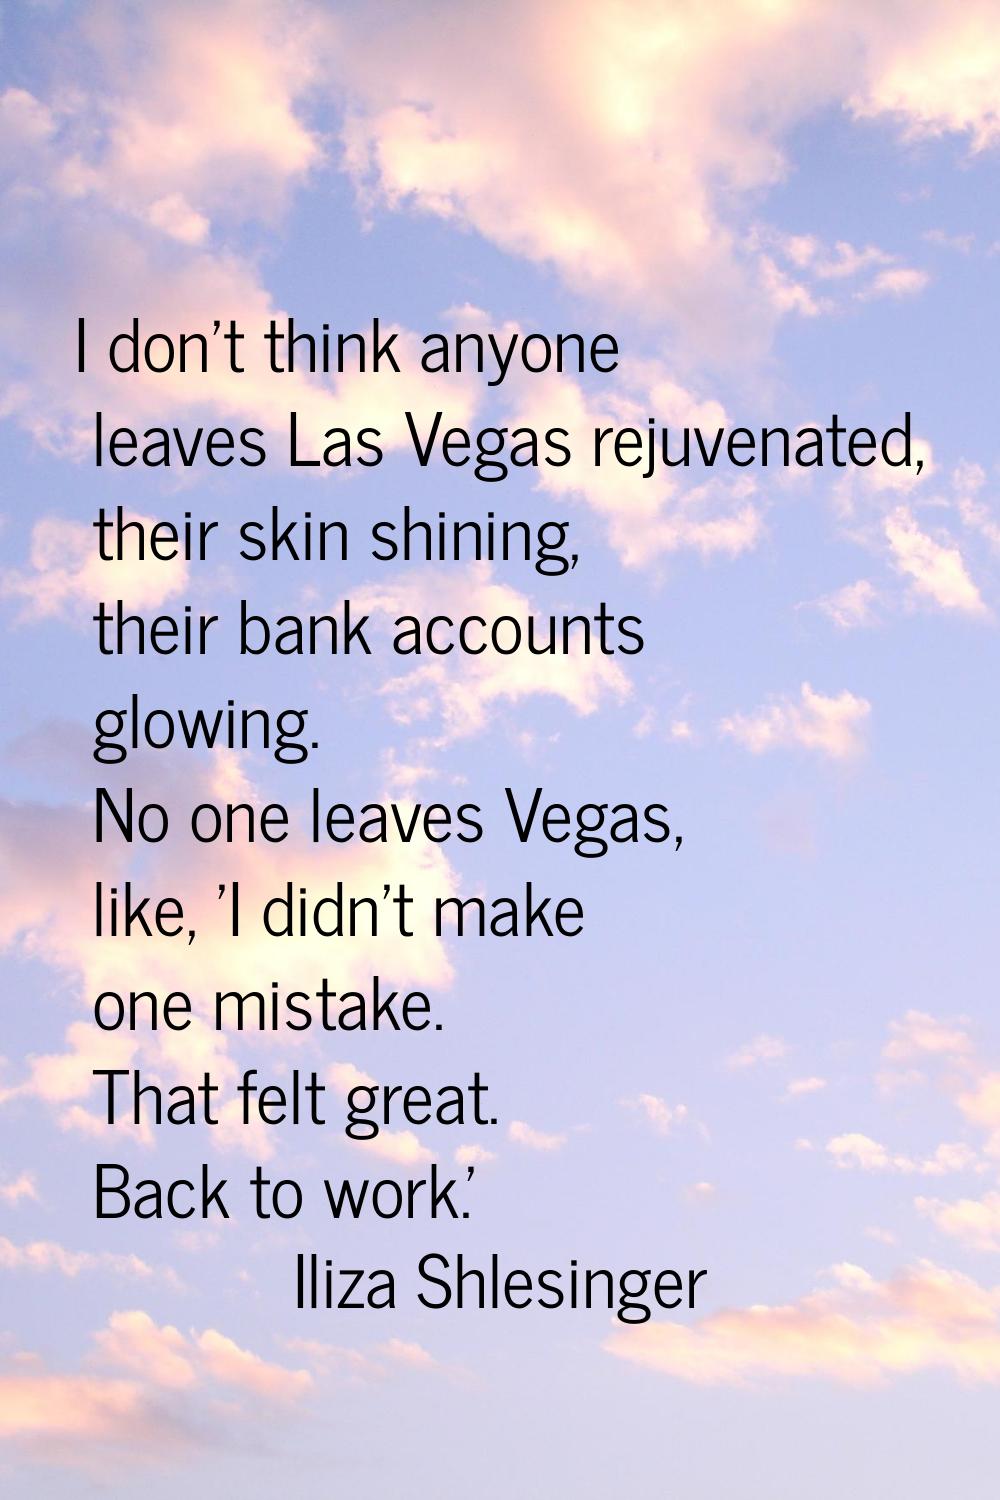 I don't think anyone leaves Las Vegas rejuvenated, their skin shining, their bank accounts glowing.